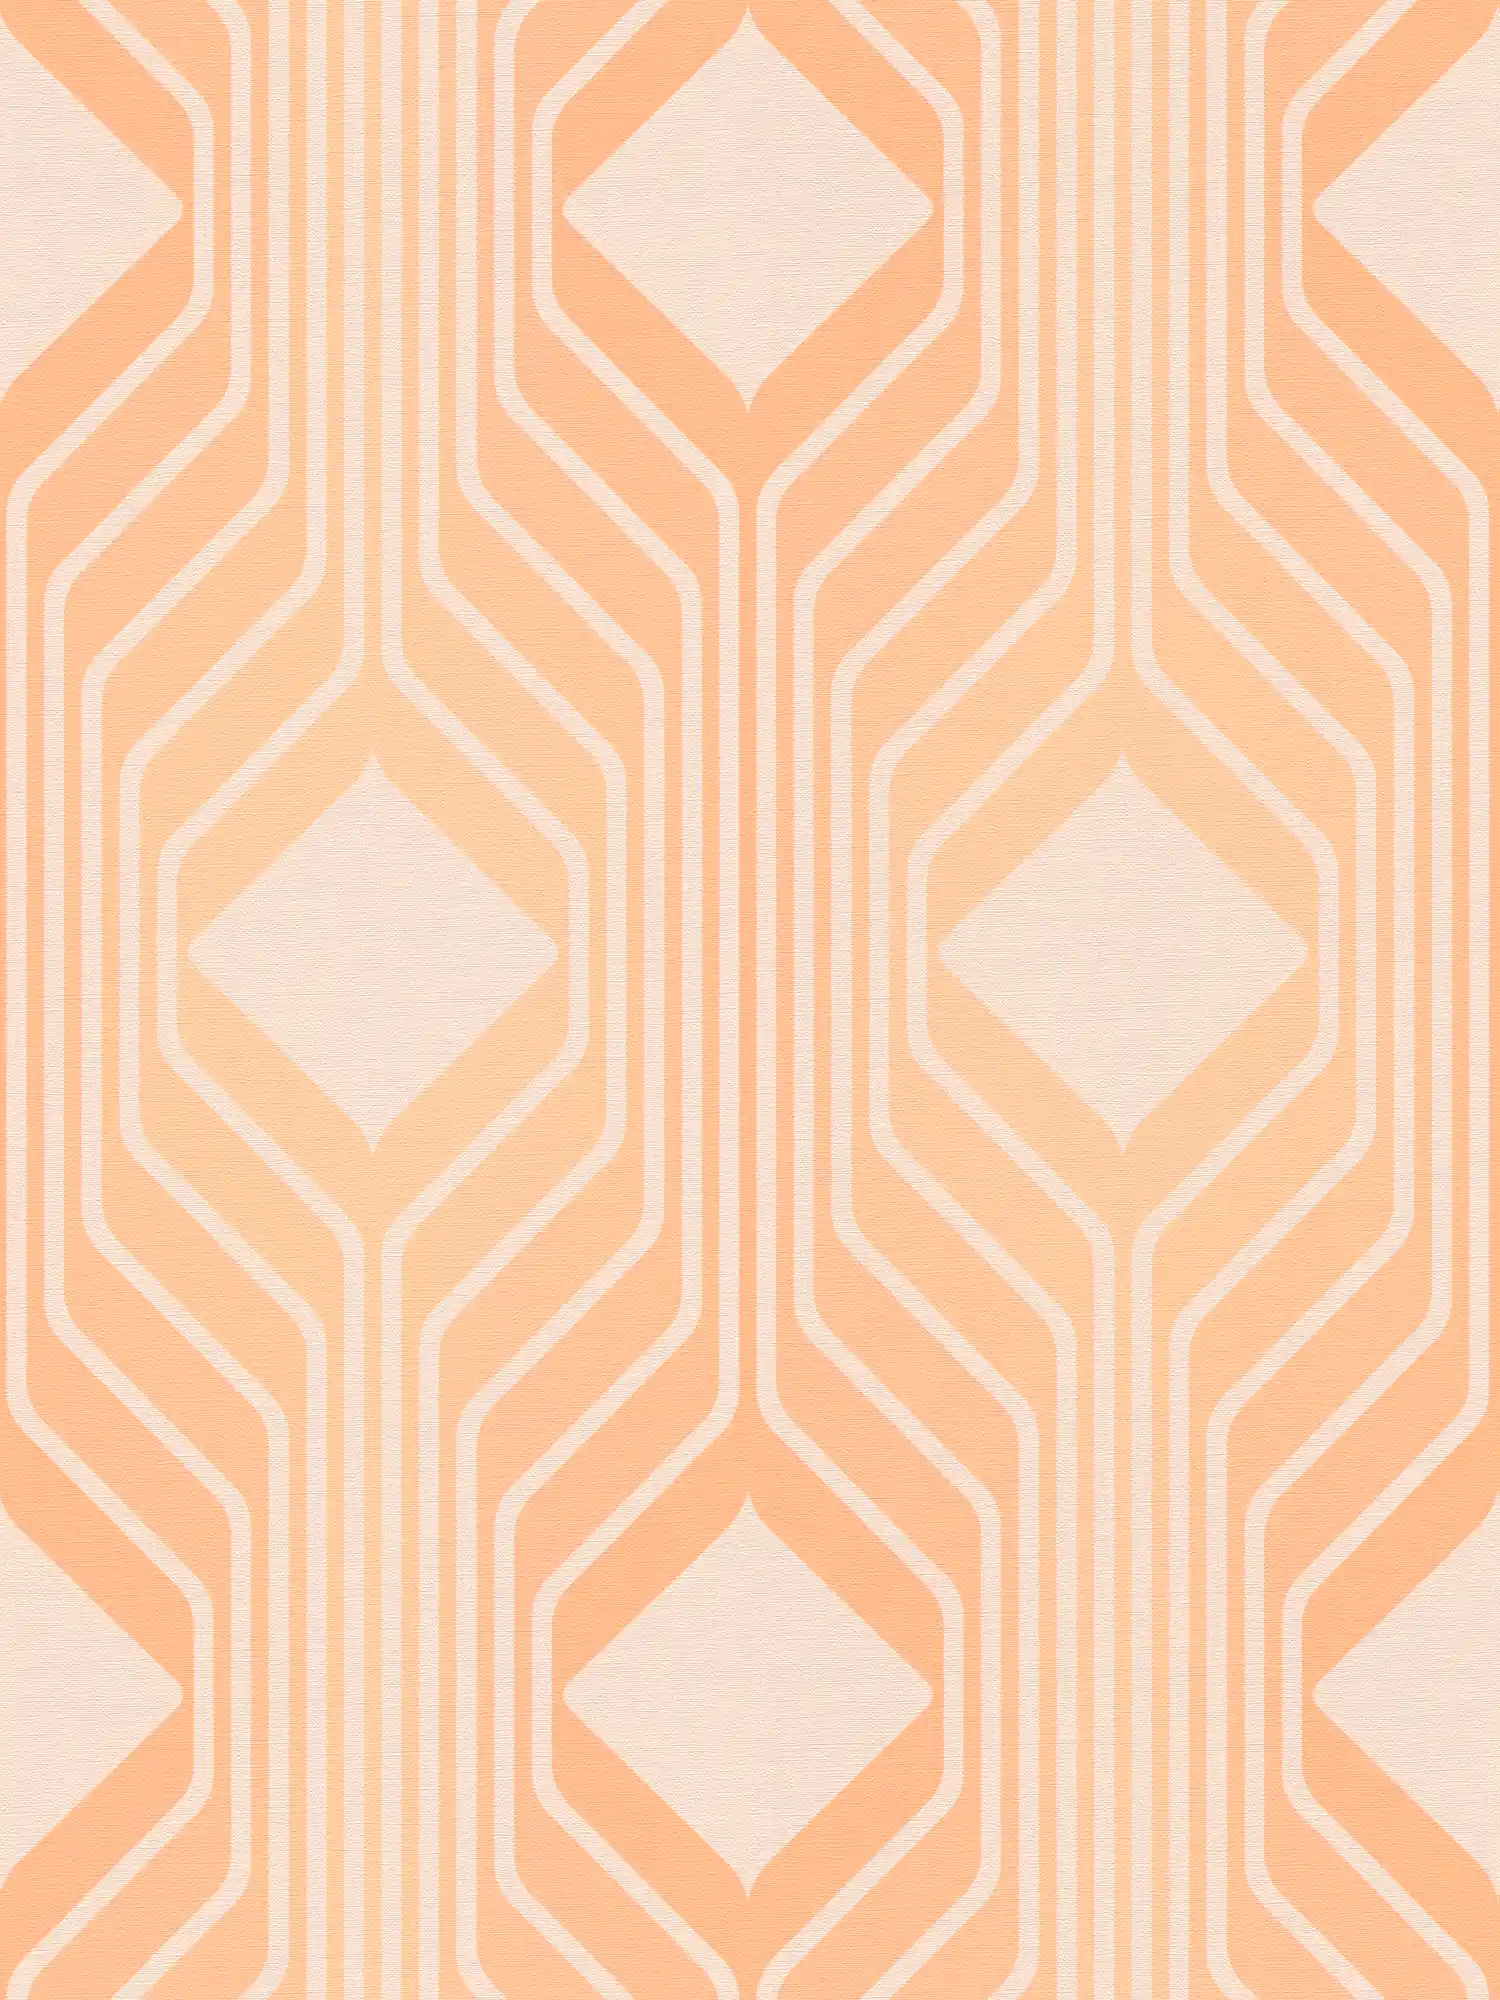         Retro wallpaper with diamond pattern in warm colours - orange, beige
    